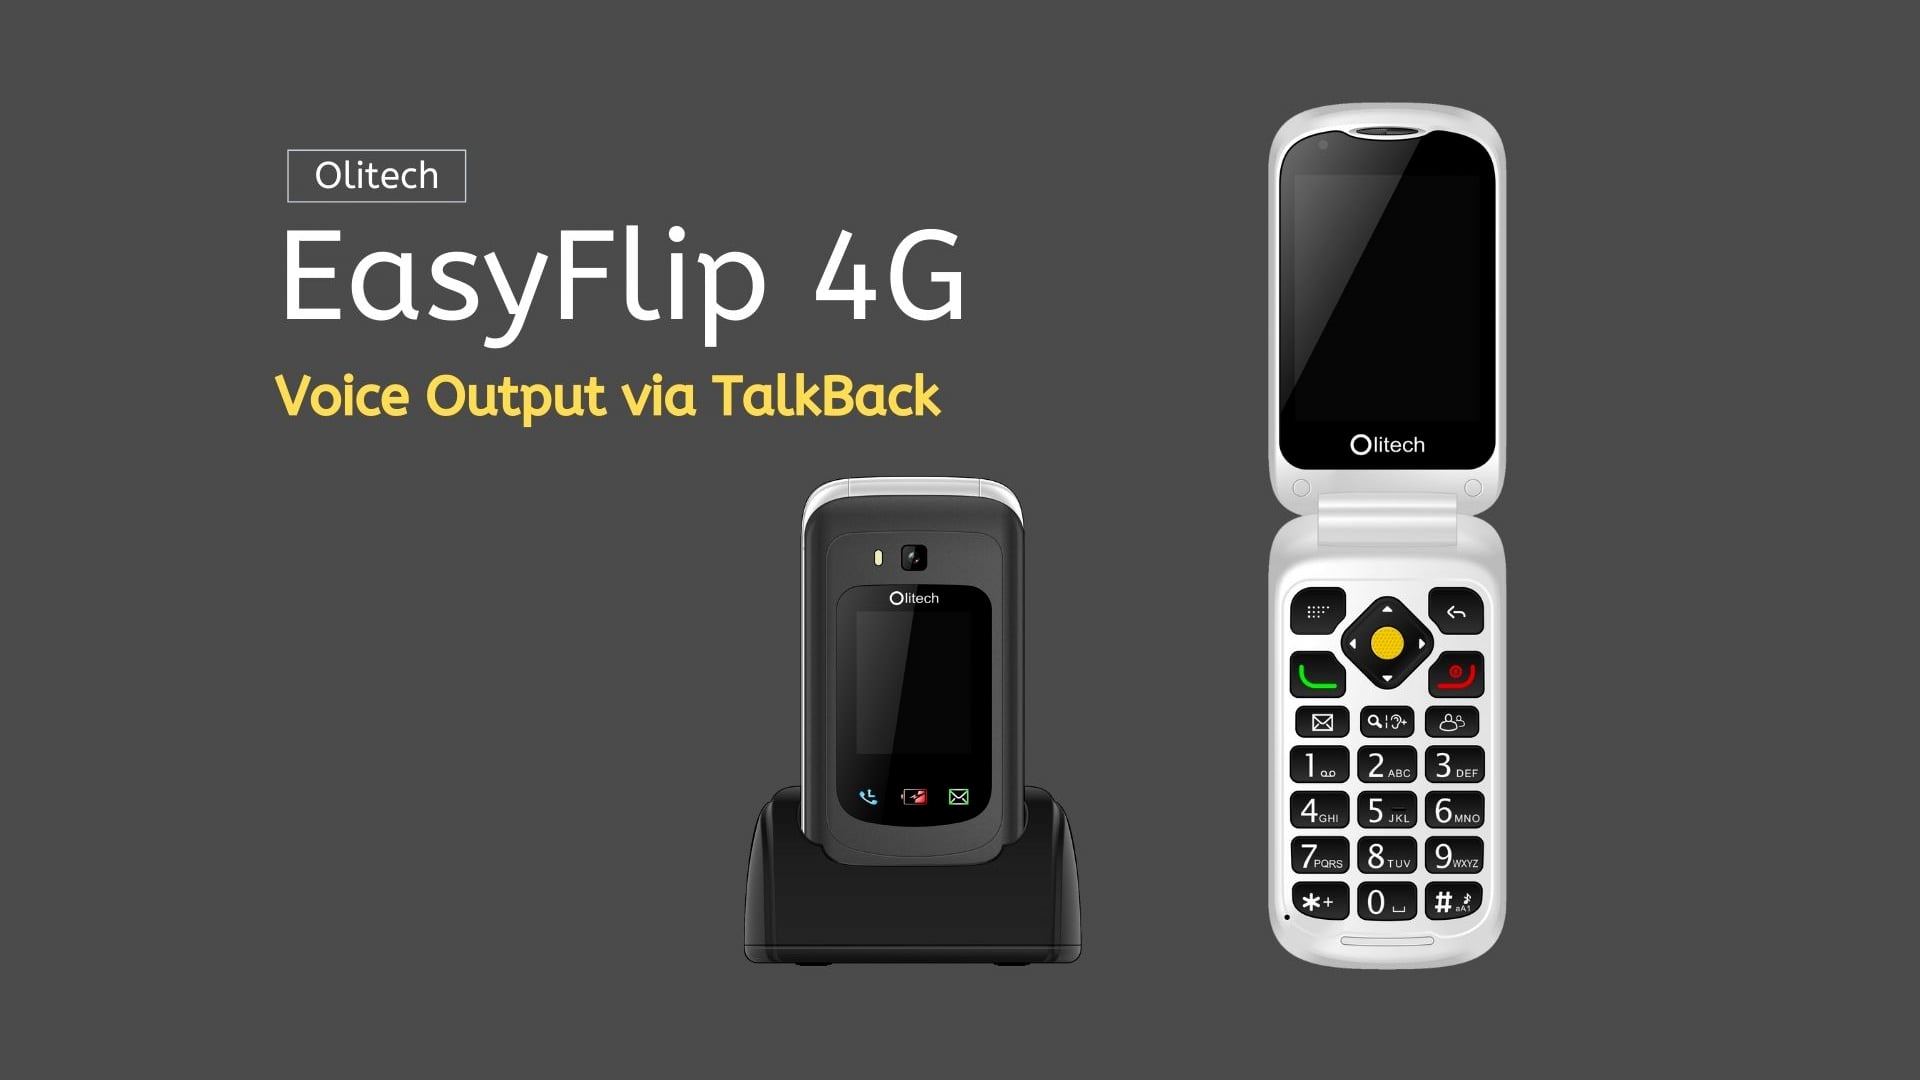 Olitech EasyFlip 4G - Voice Output via TalkBack